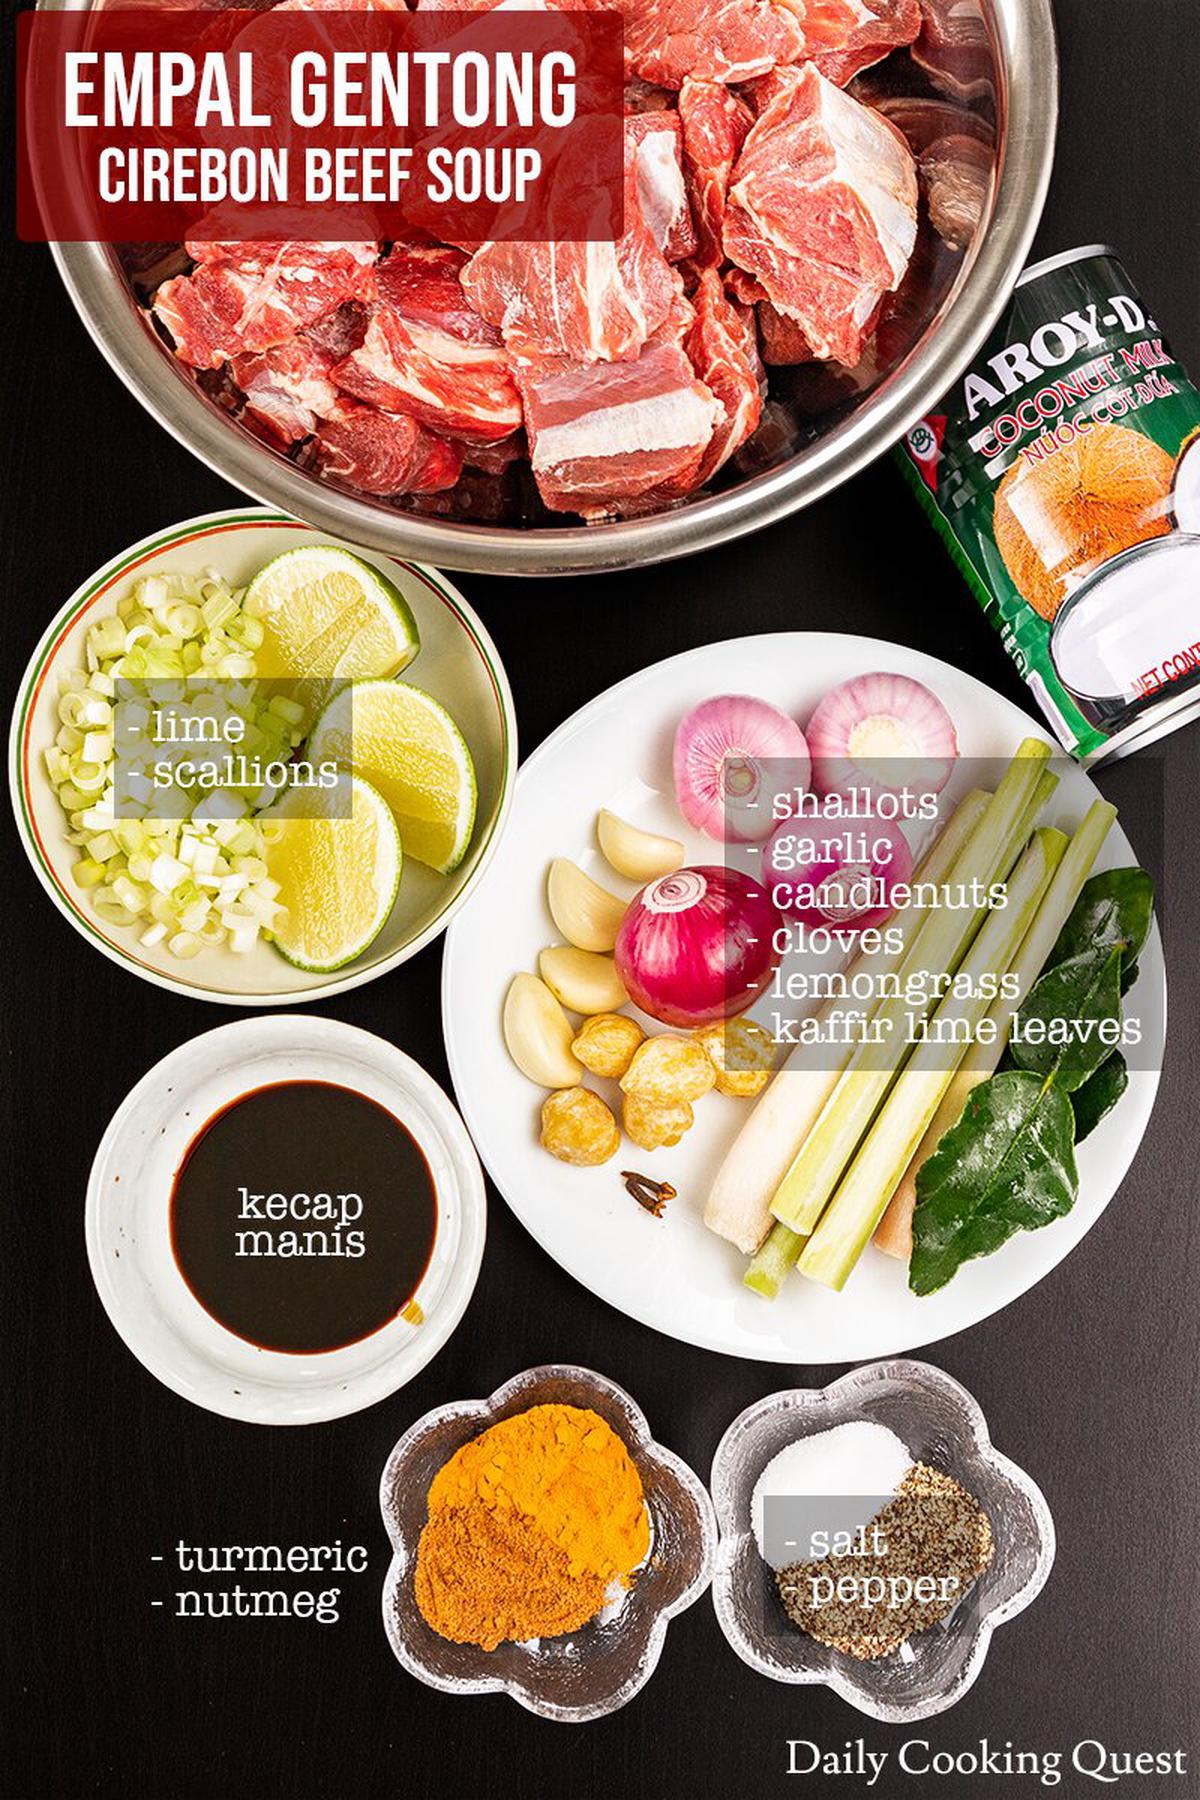 Ingredients to prepare empal gentong (Cirebon beef soup).